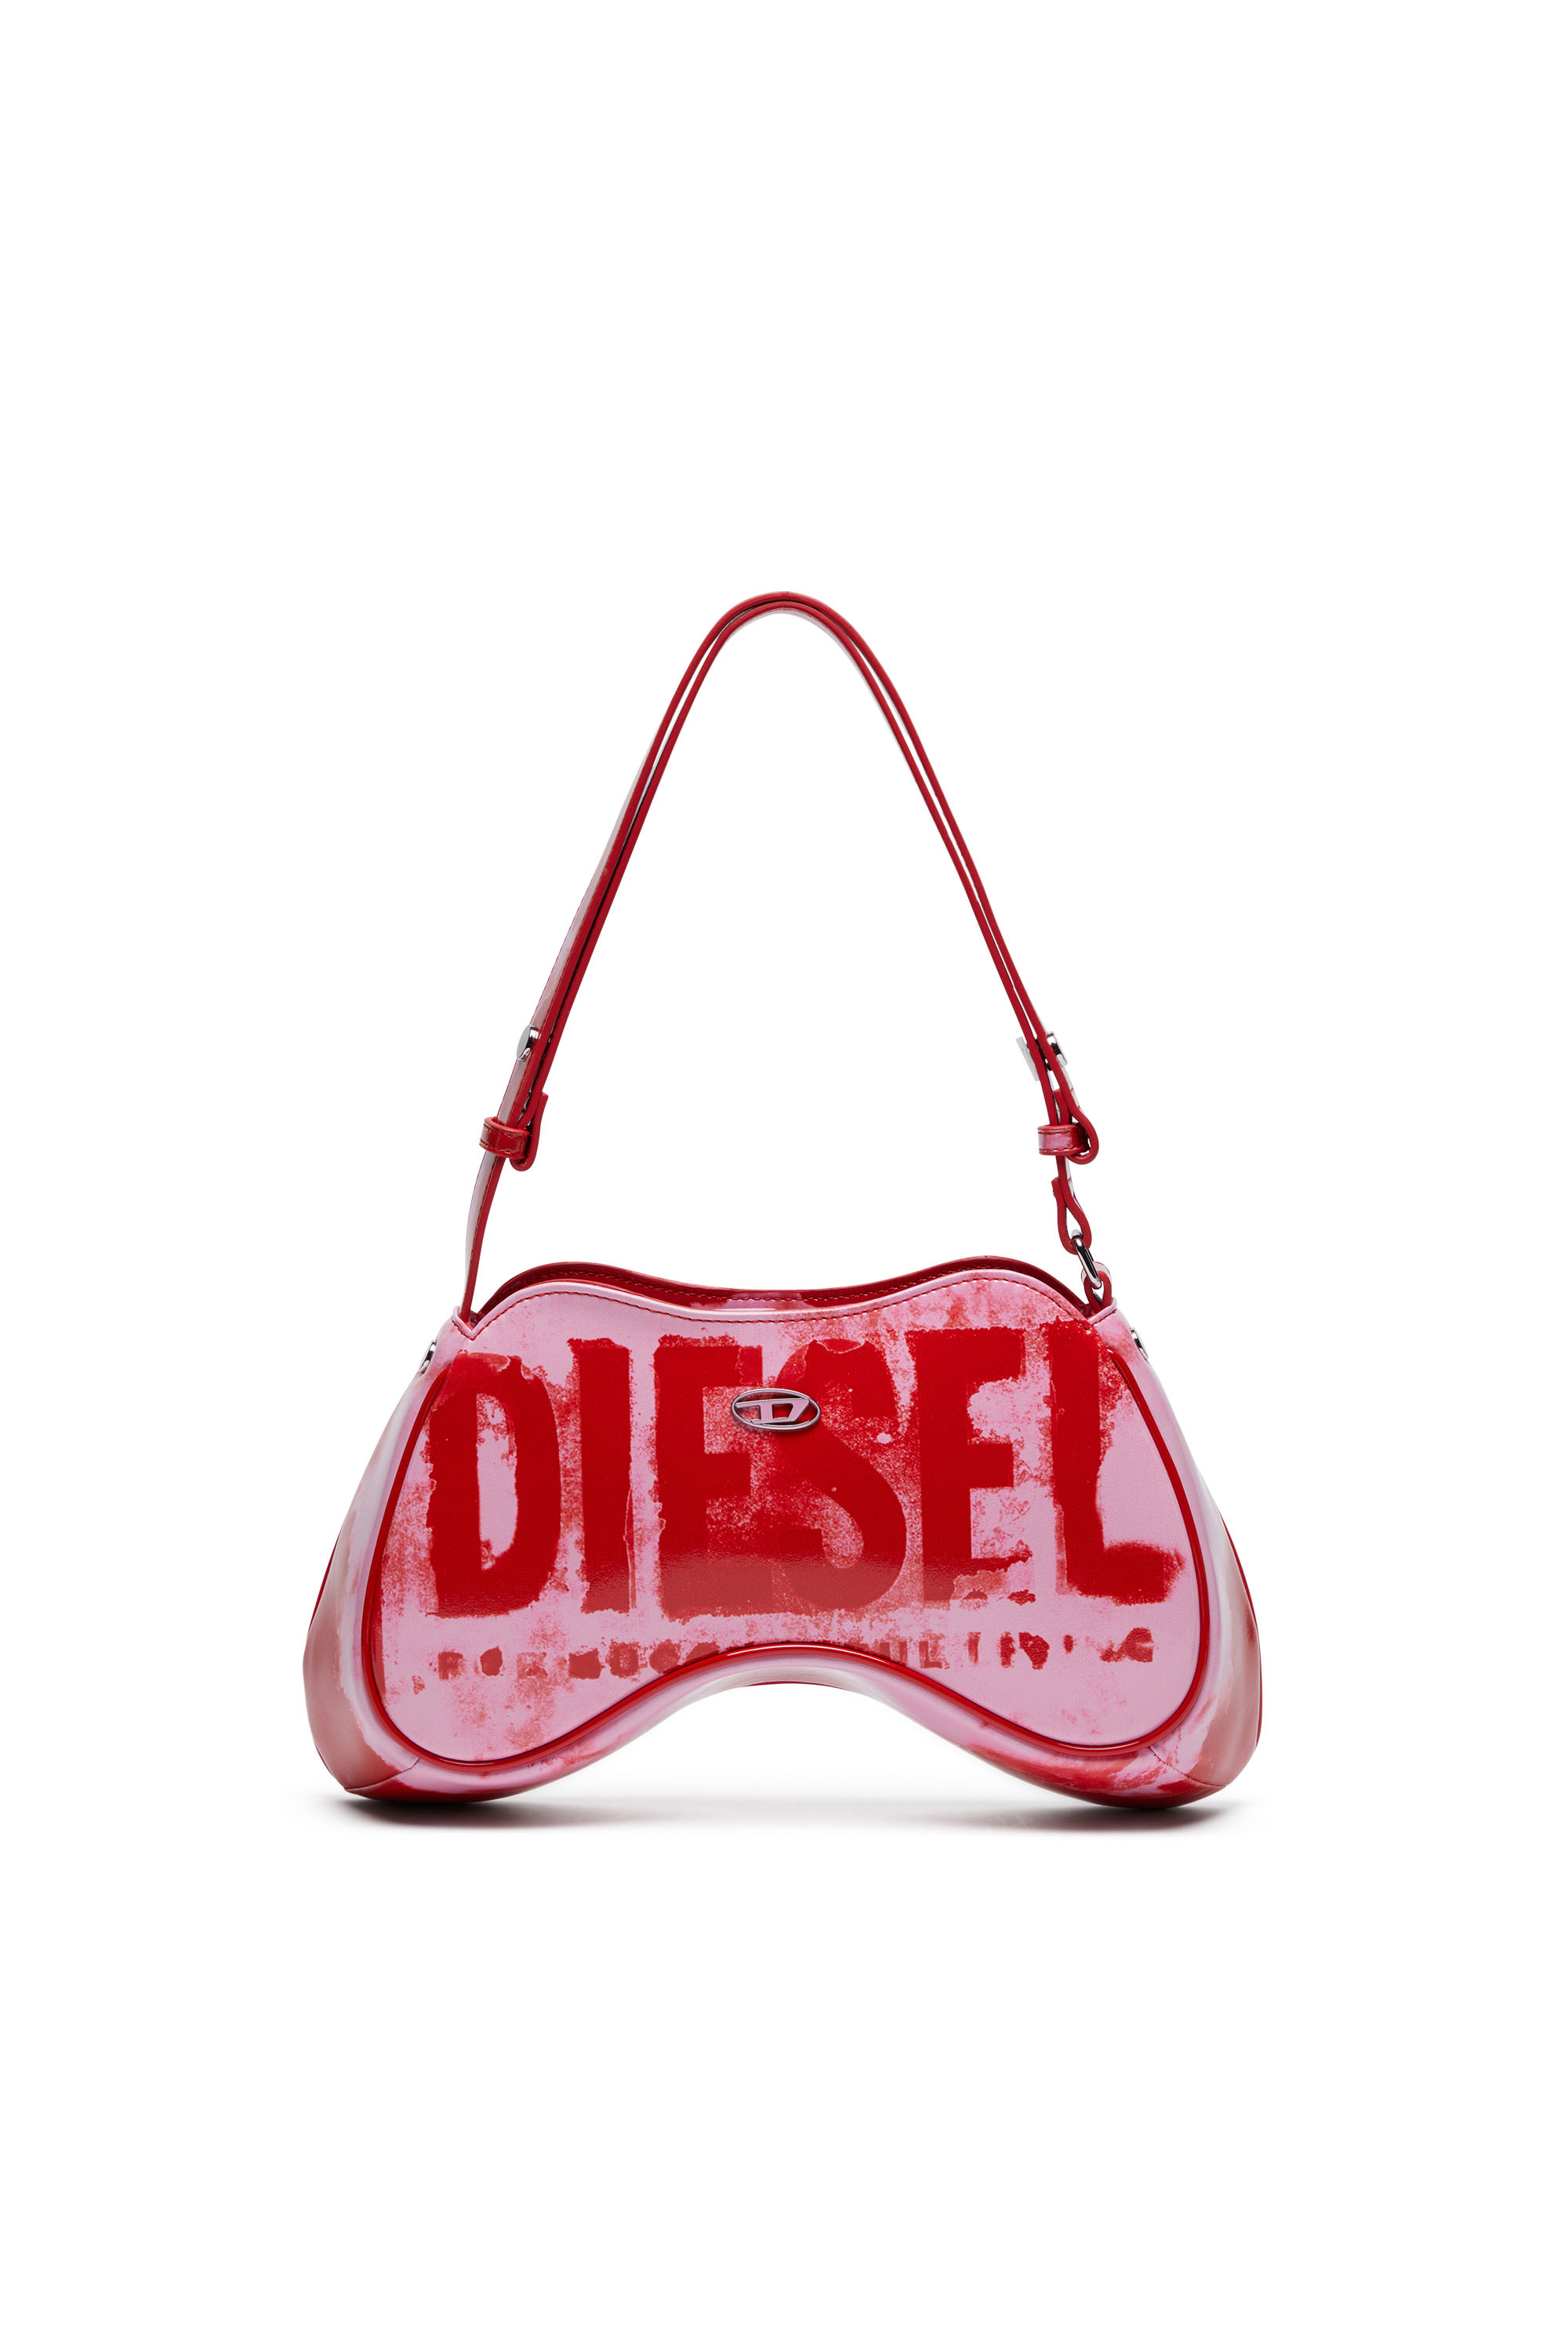 Diesel - PLAY SHOULDER, Rose/Rouge - Image 1